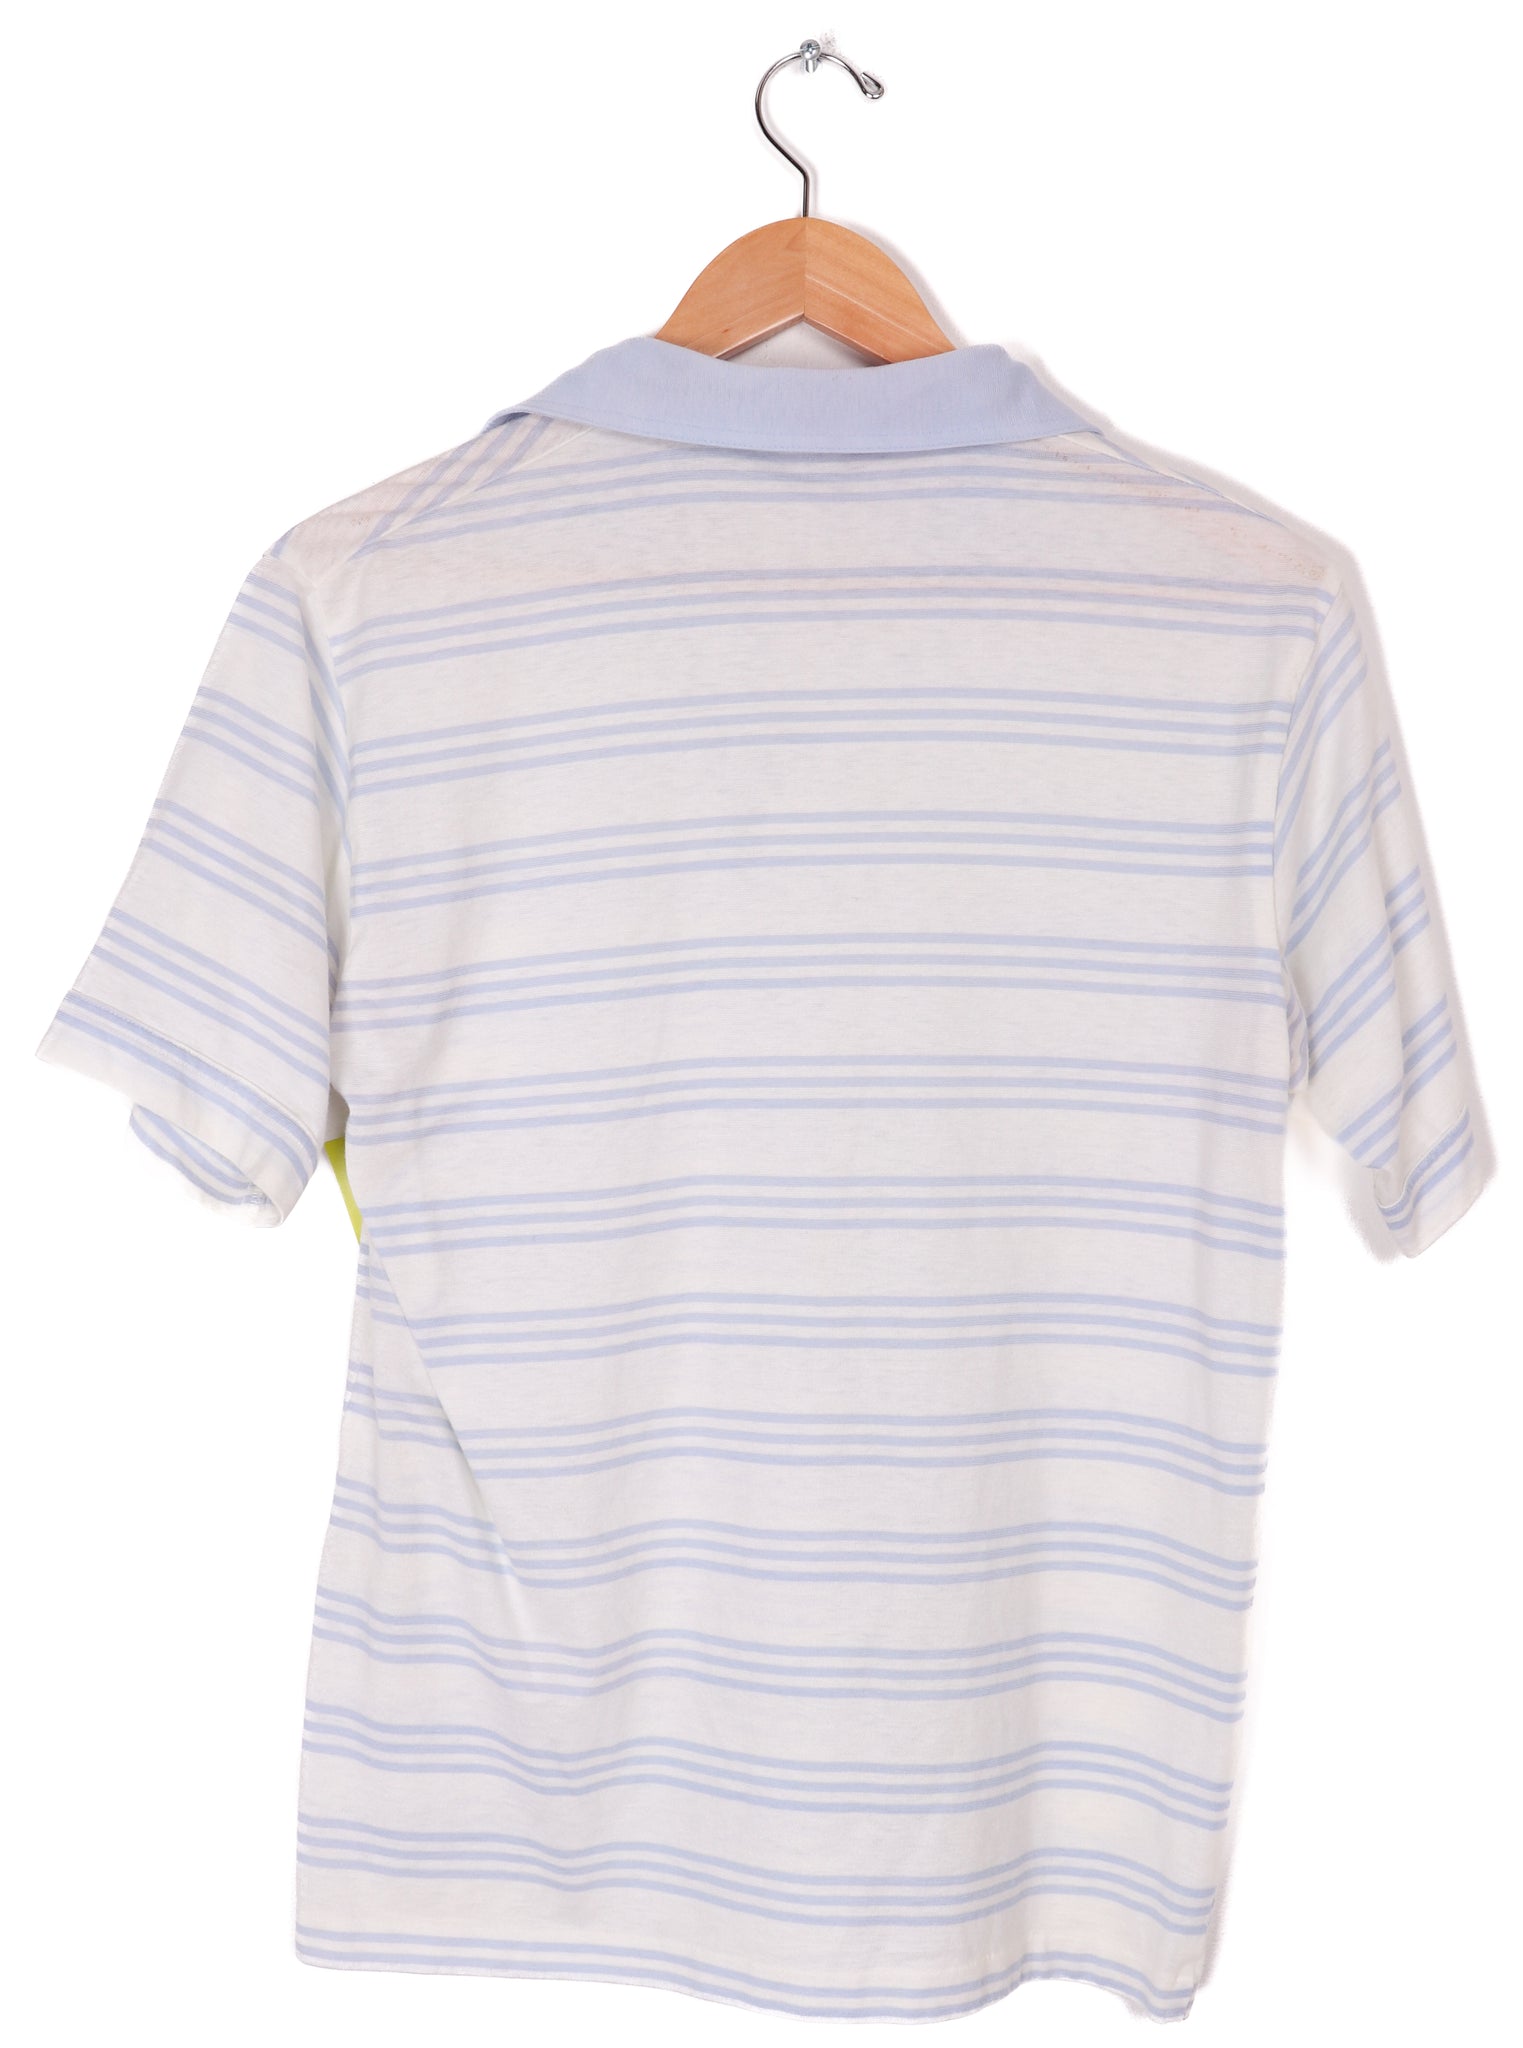 Early 90s Par Four Sportswear Blue Striped Collared Shirt